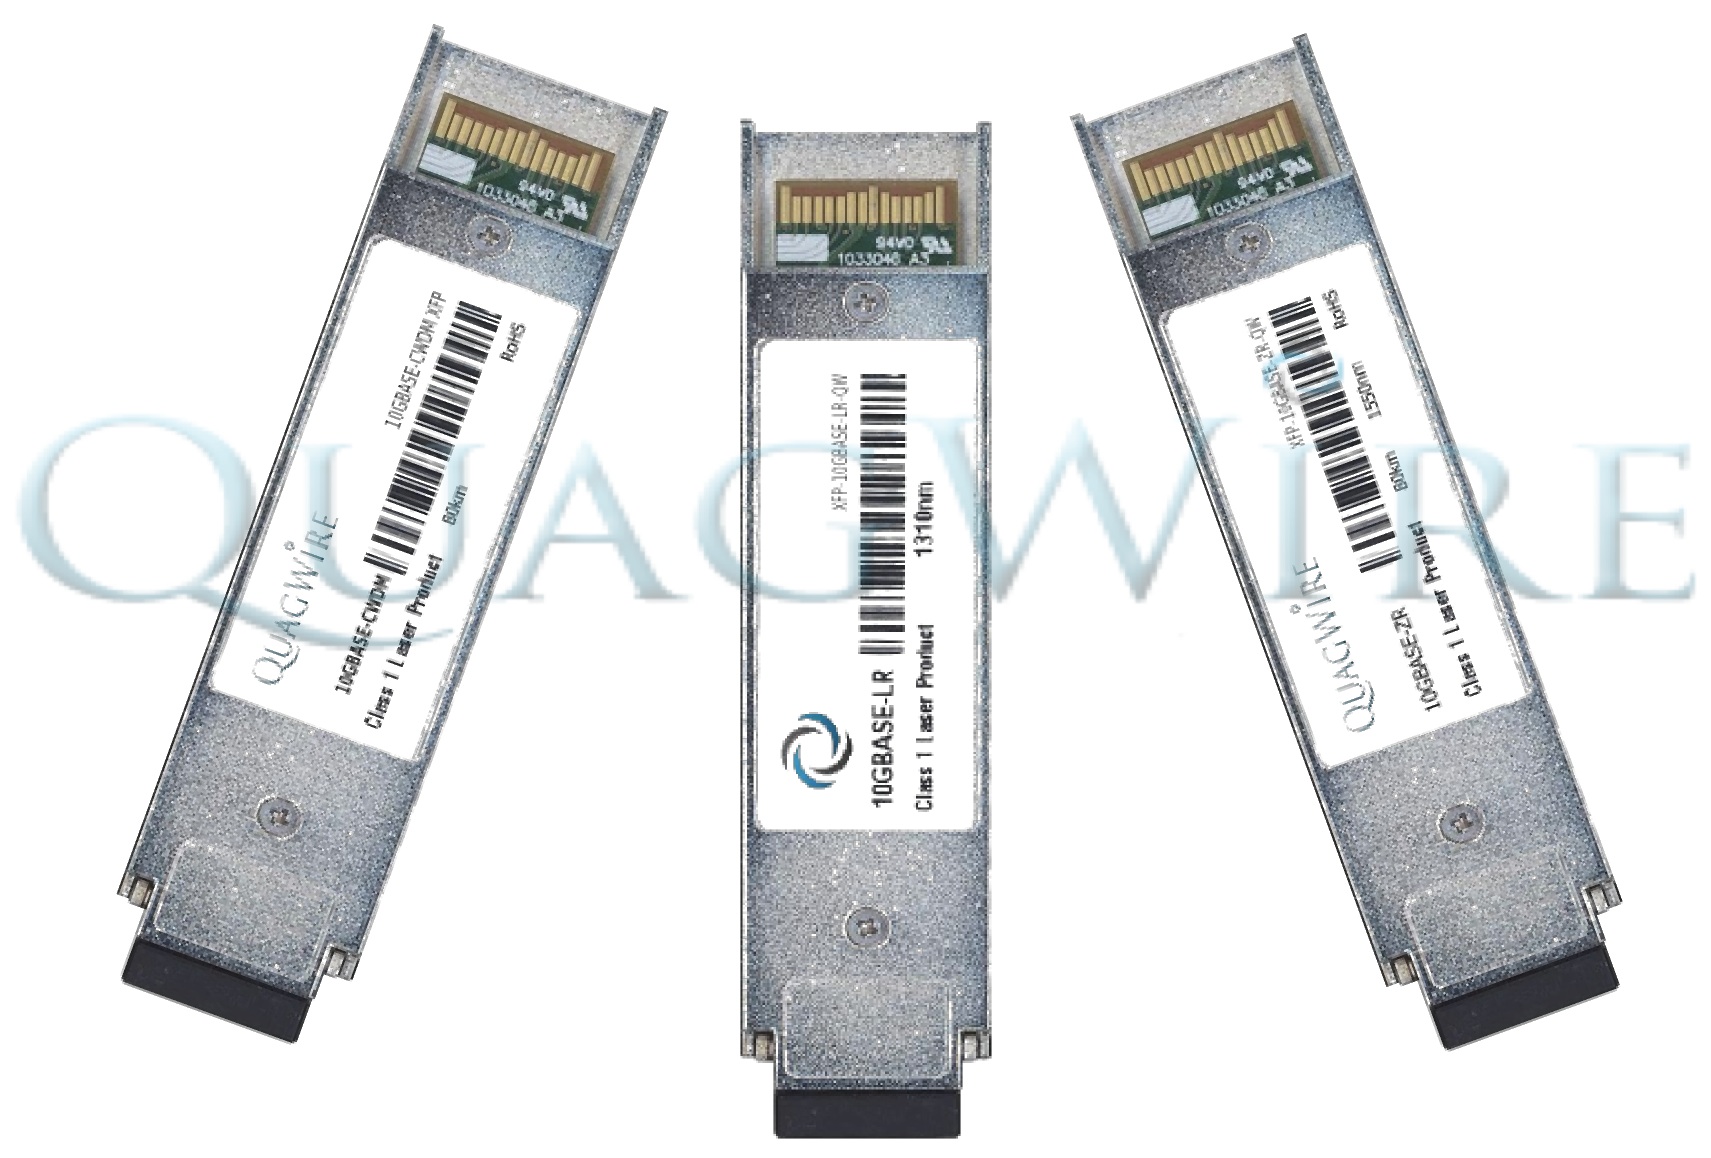 Enterasys 10GBASE-LR-XFP 10GBASE-LR 1310nm SM LR XFP Optical Transceiver (10GBASE-LR-XFP-QW)